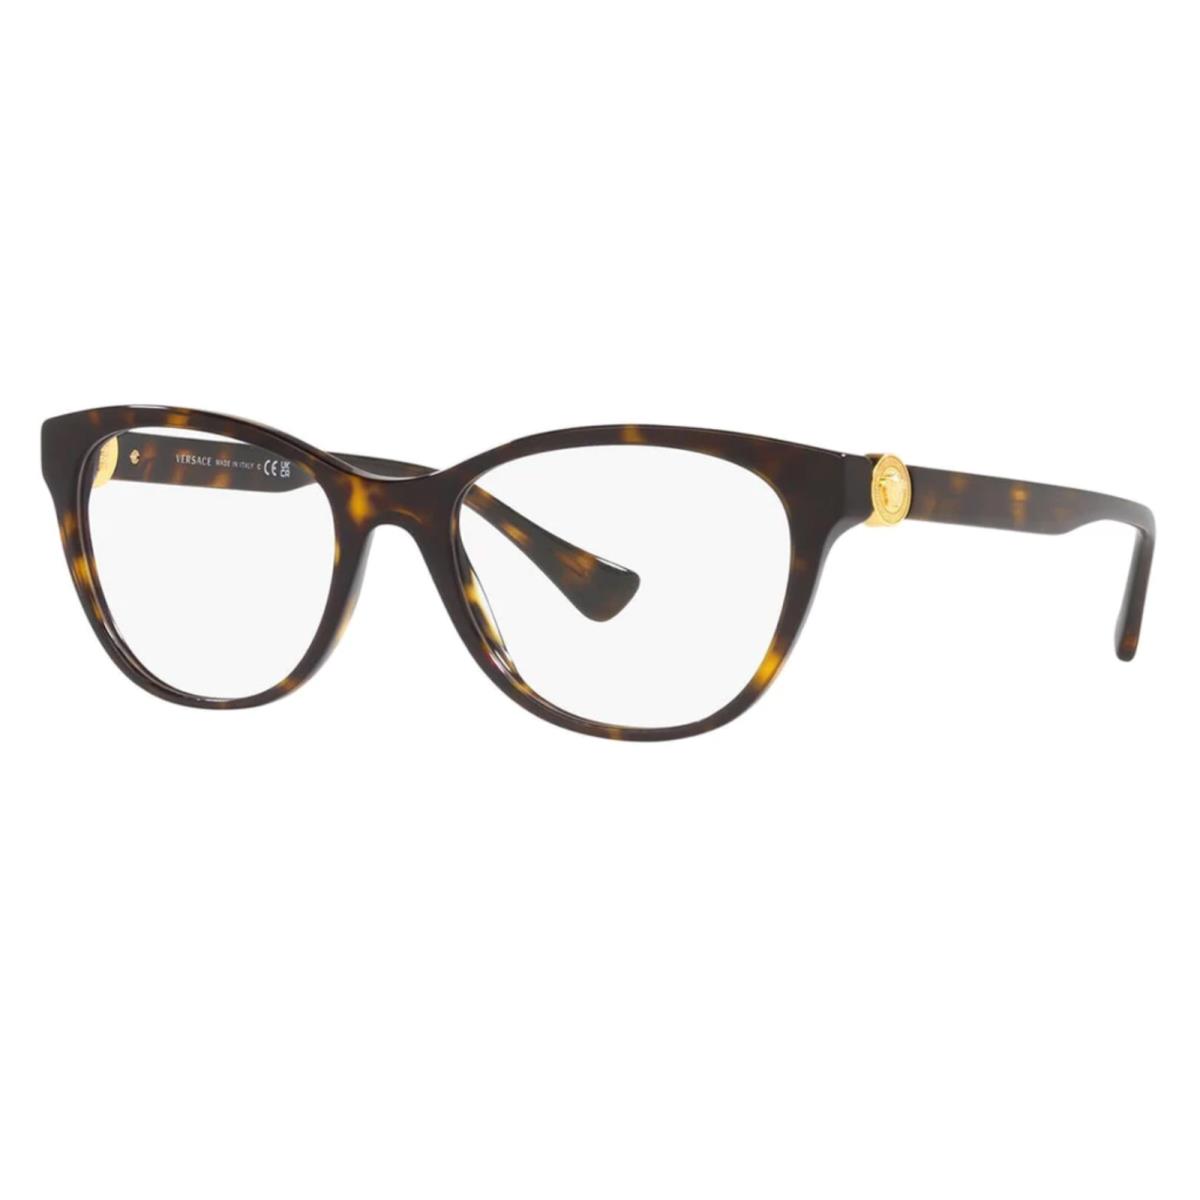 Versace Cat Eyes Eyeglasses Mod. 3330 108 55-19 145 Large Tortoise Gold Frames